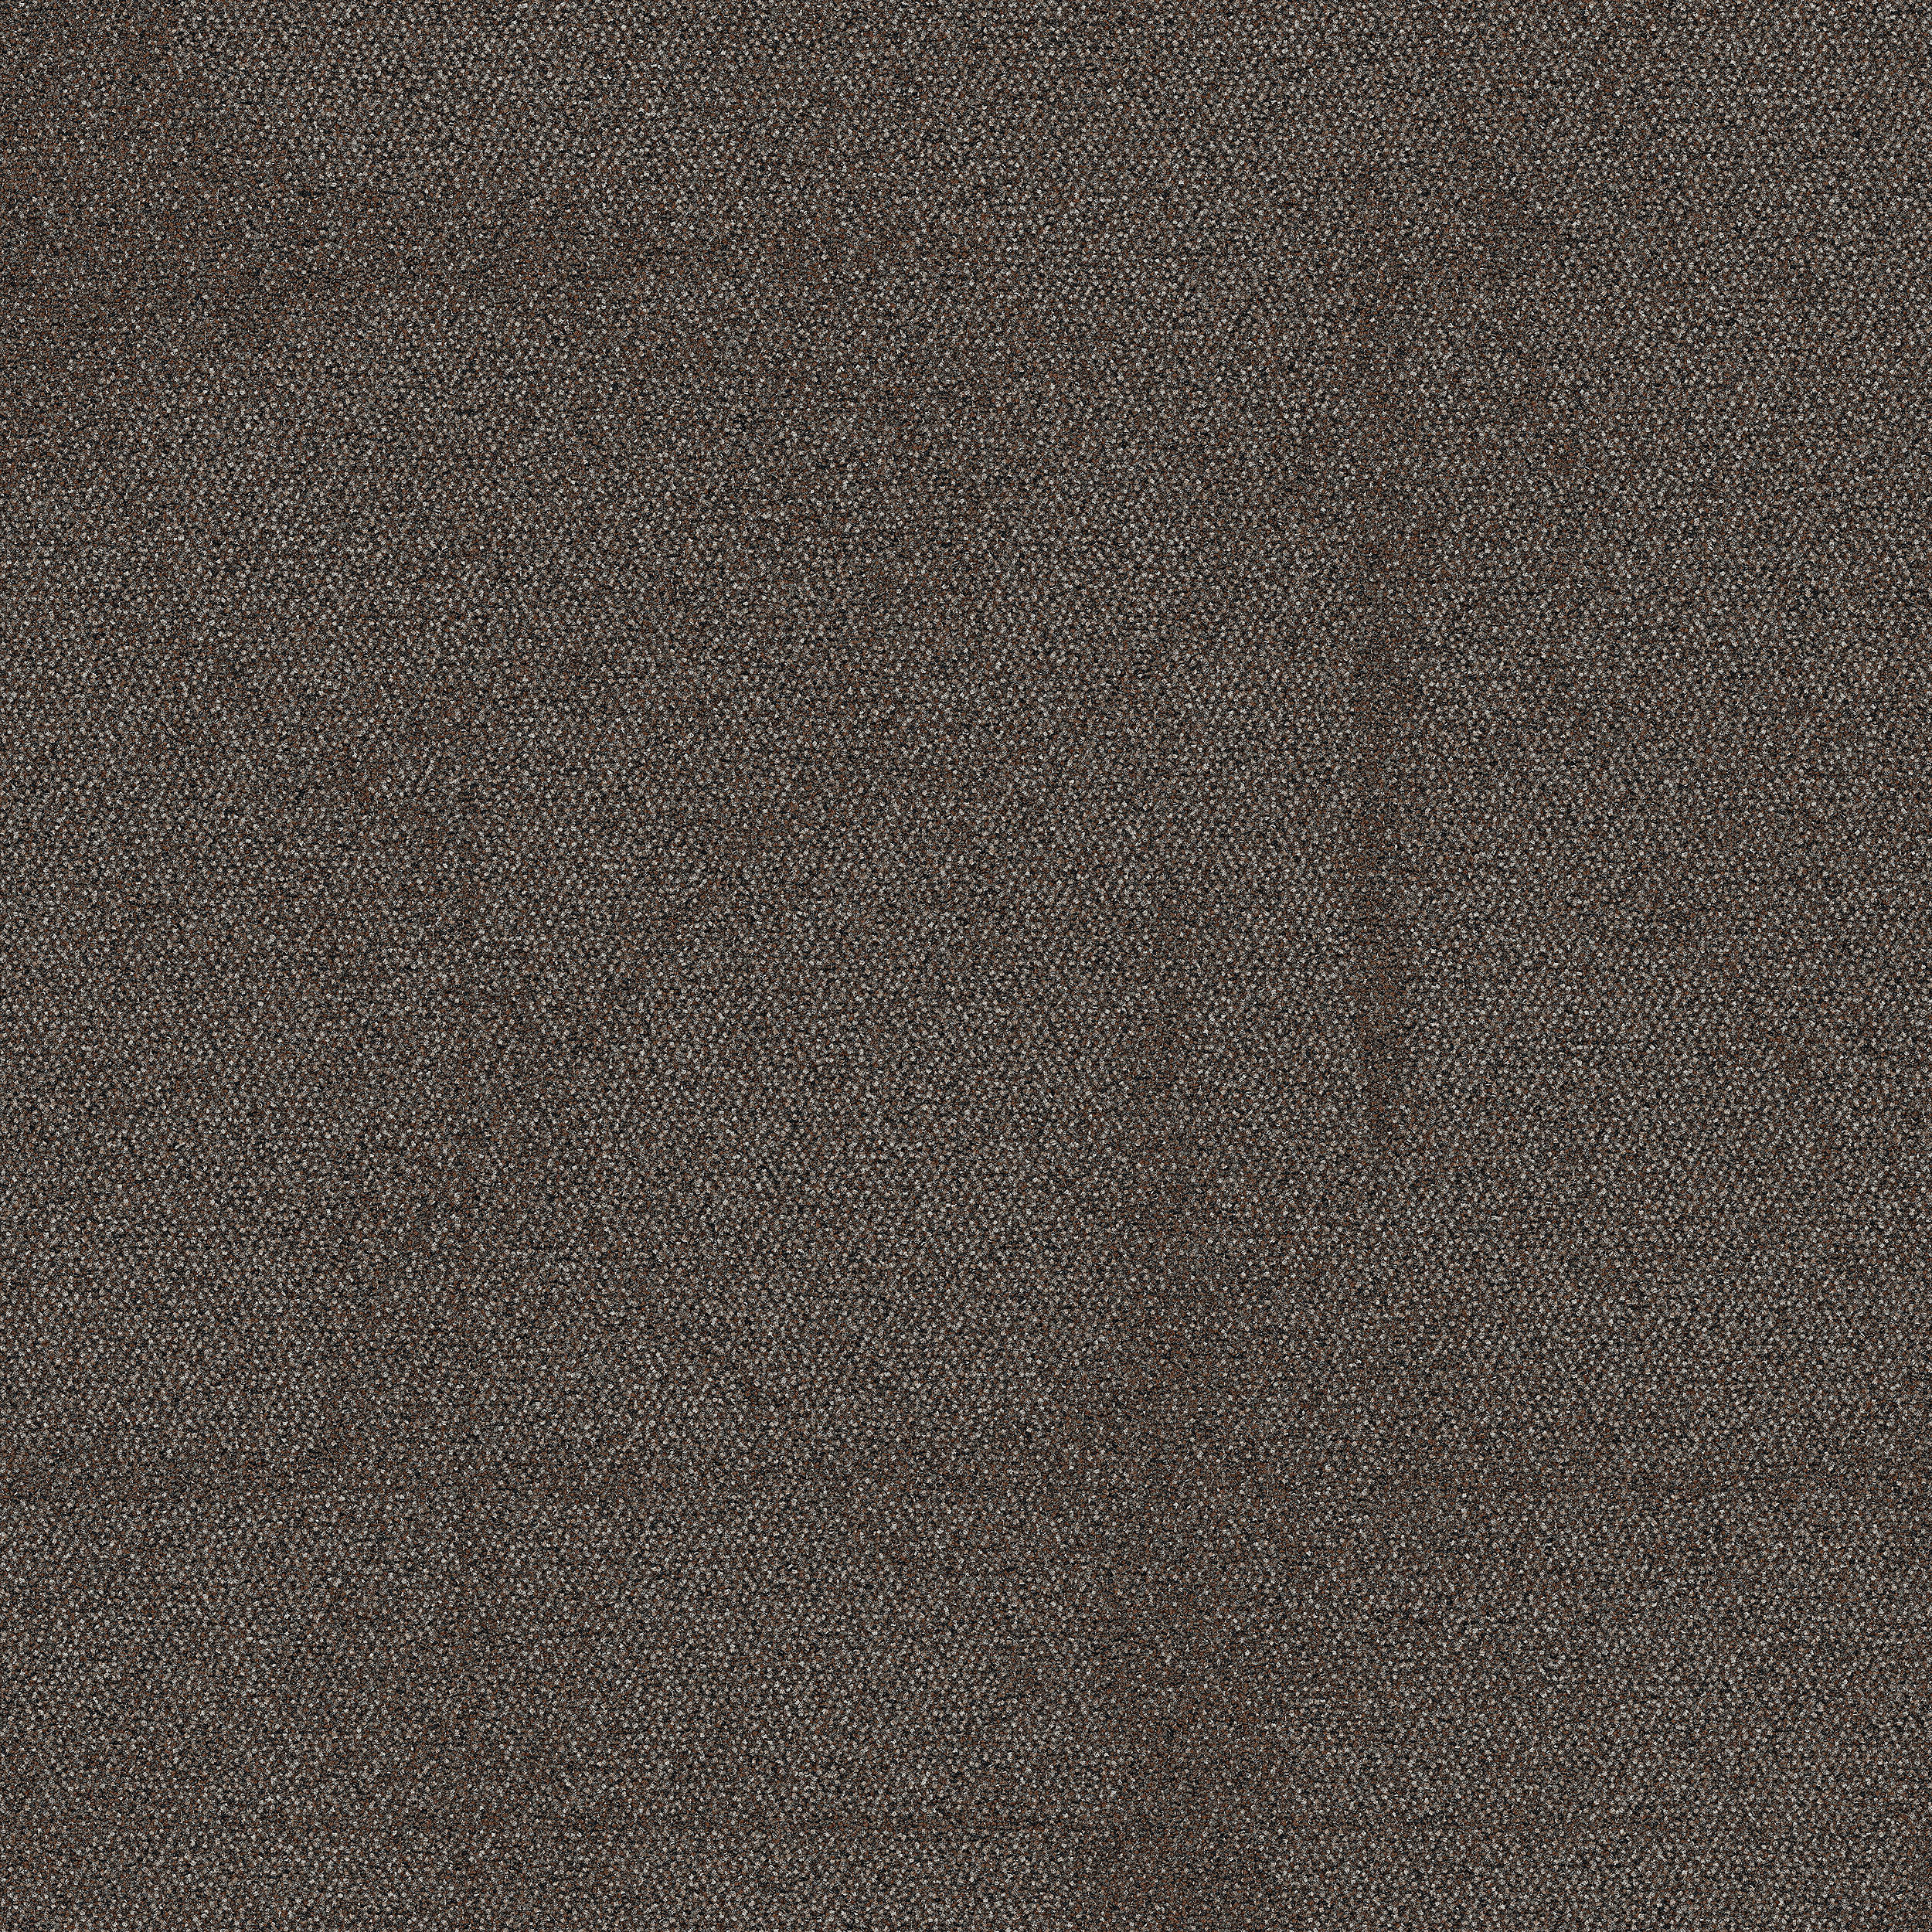 Jumbo Rock Carpet Tile in Brown image number 4